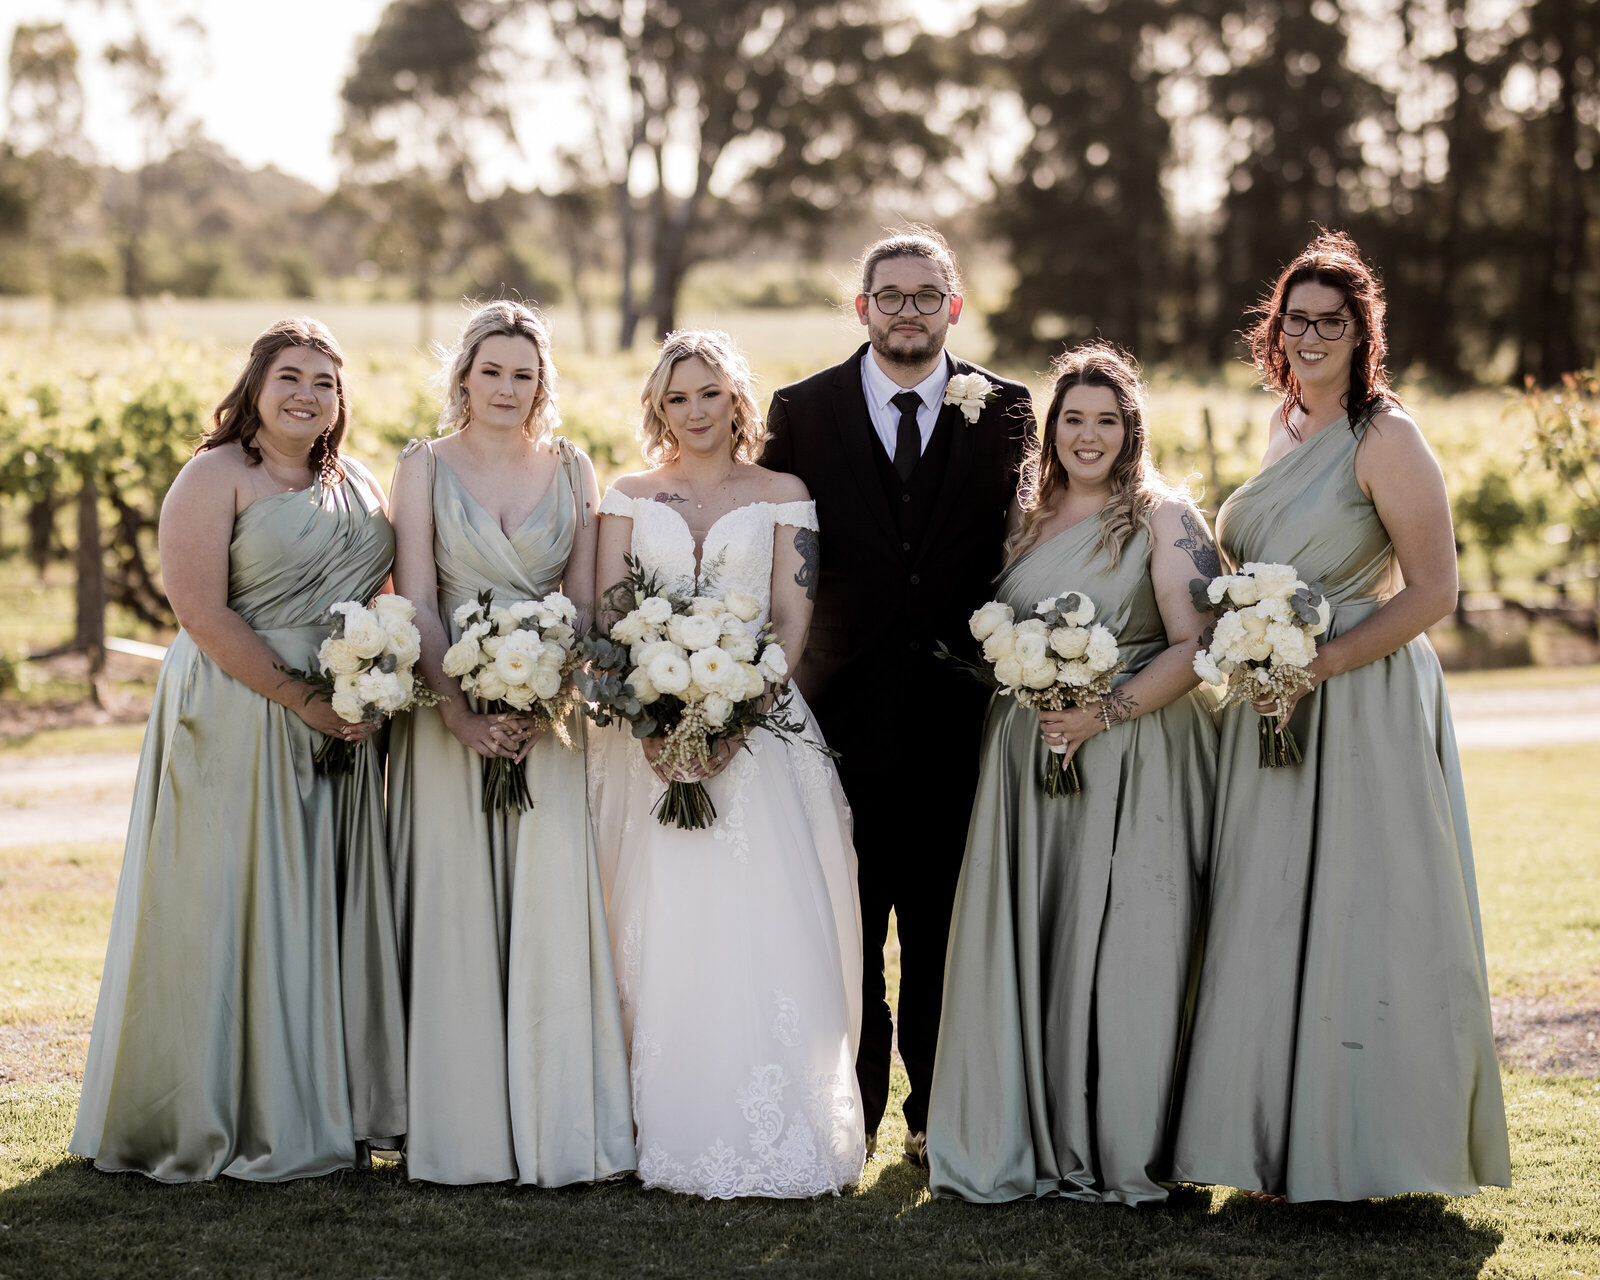 Maxine-Chris-Rexvil-Photography-Adelaide-Wedding-Photographer-452